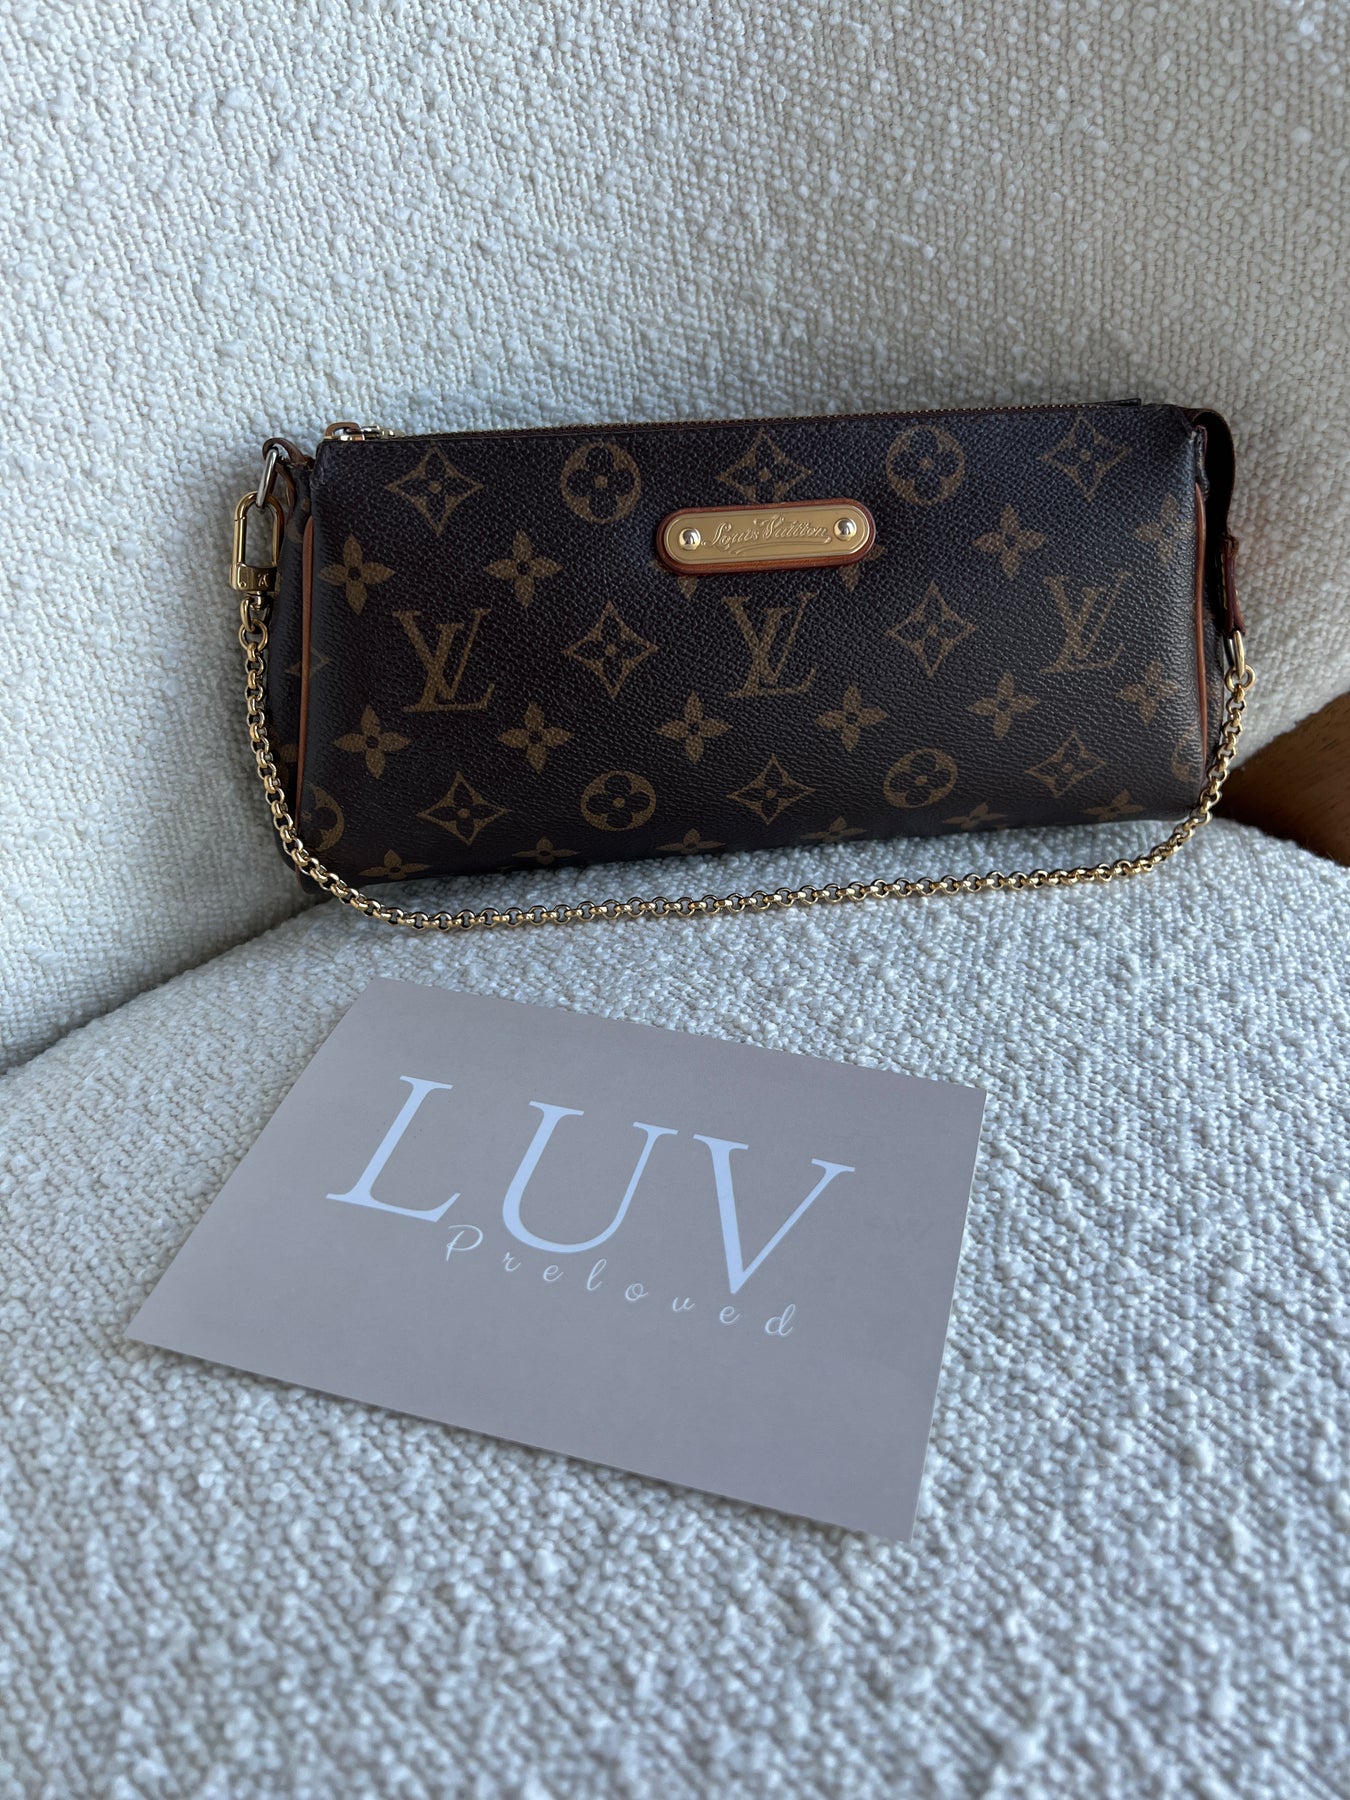 Louis Vuitton Monogram Eva 🛒Not available on webstore - DM us to